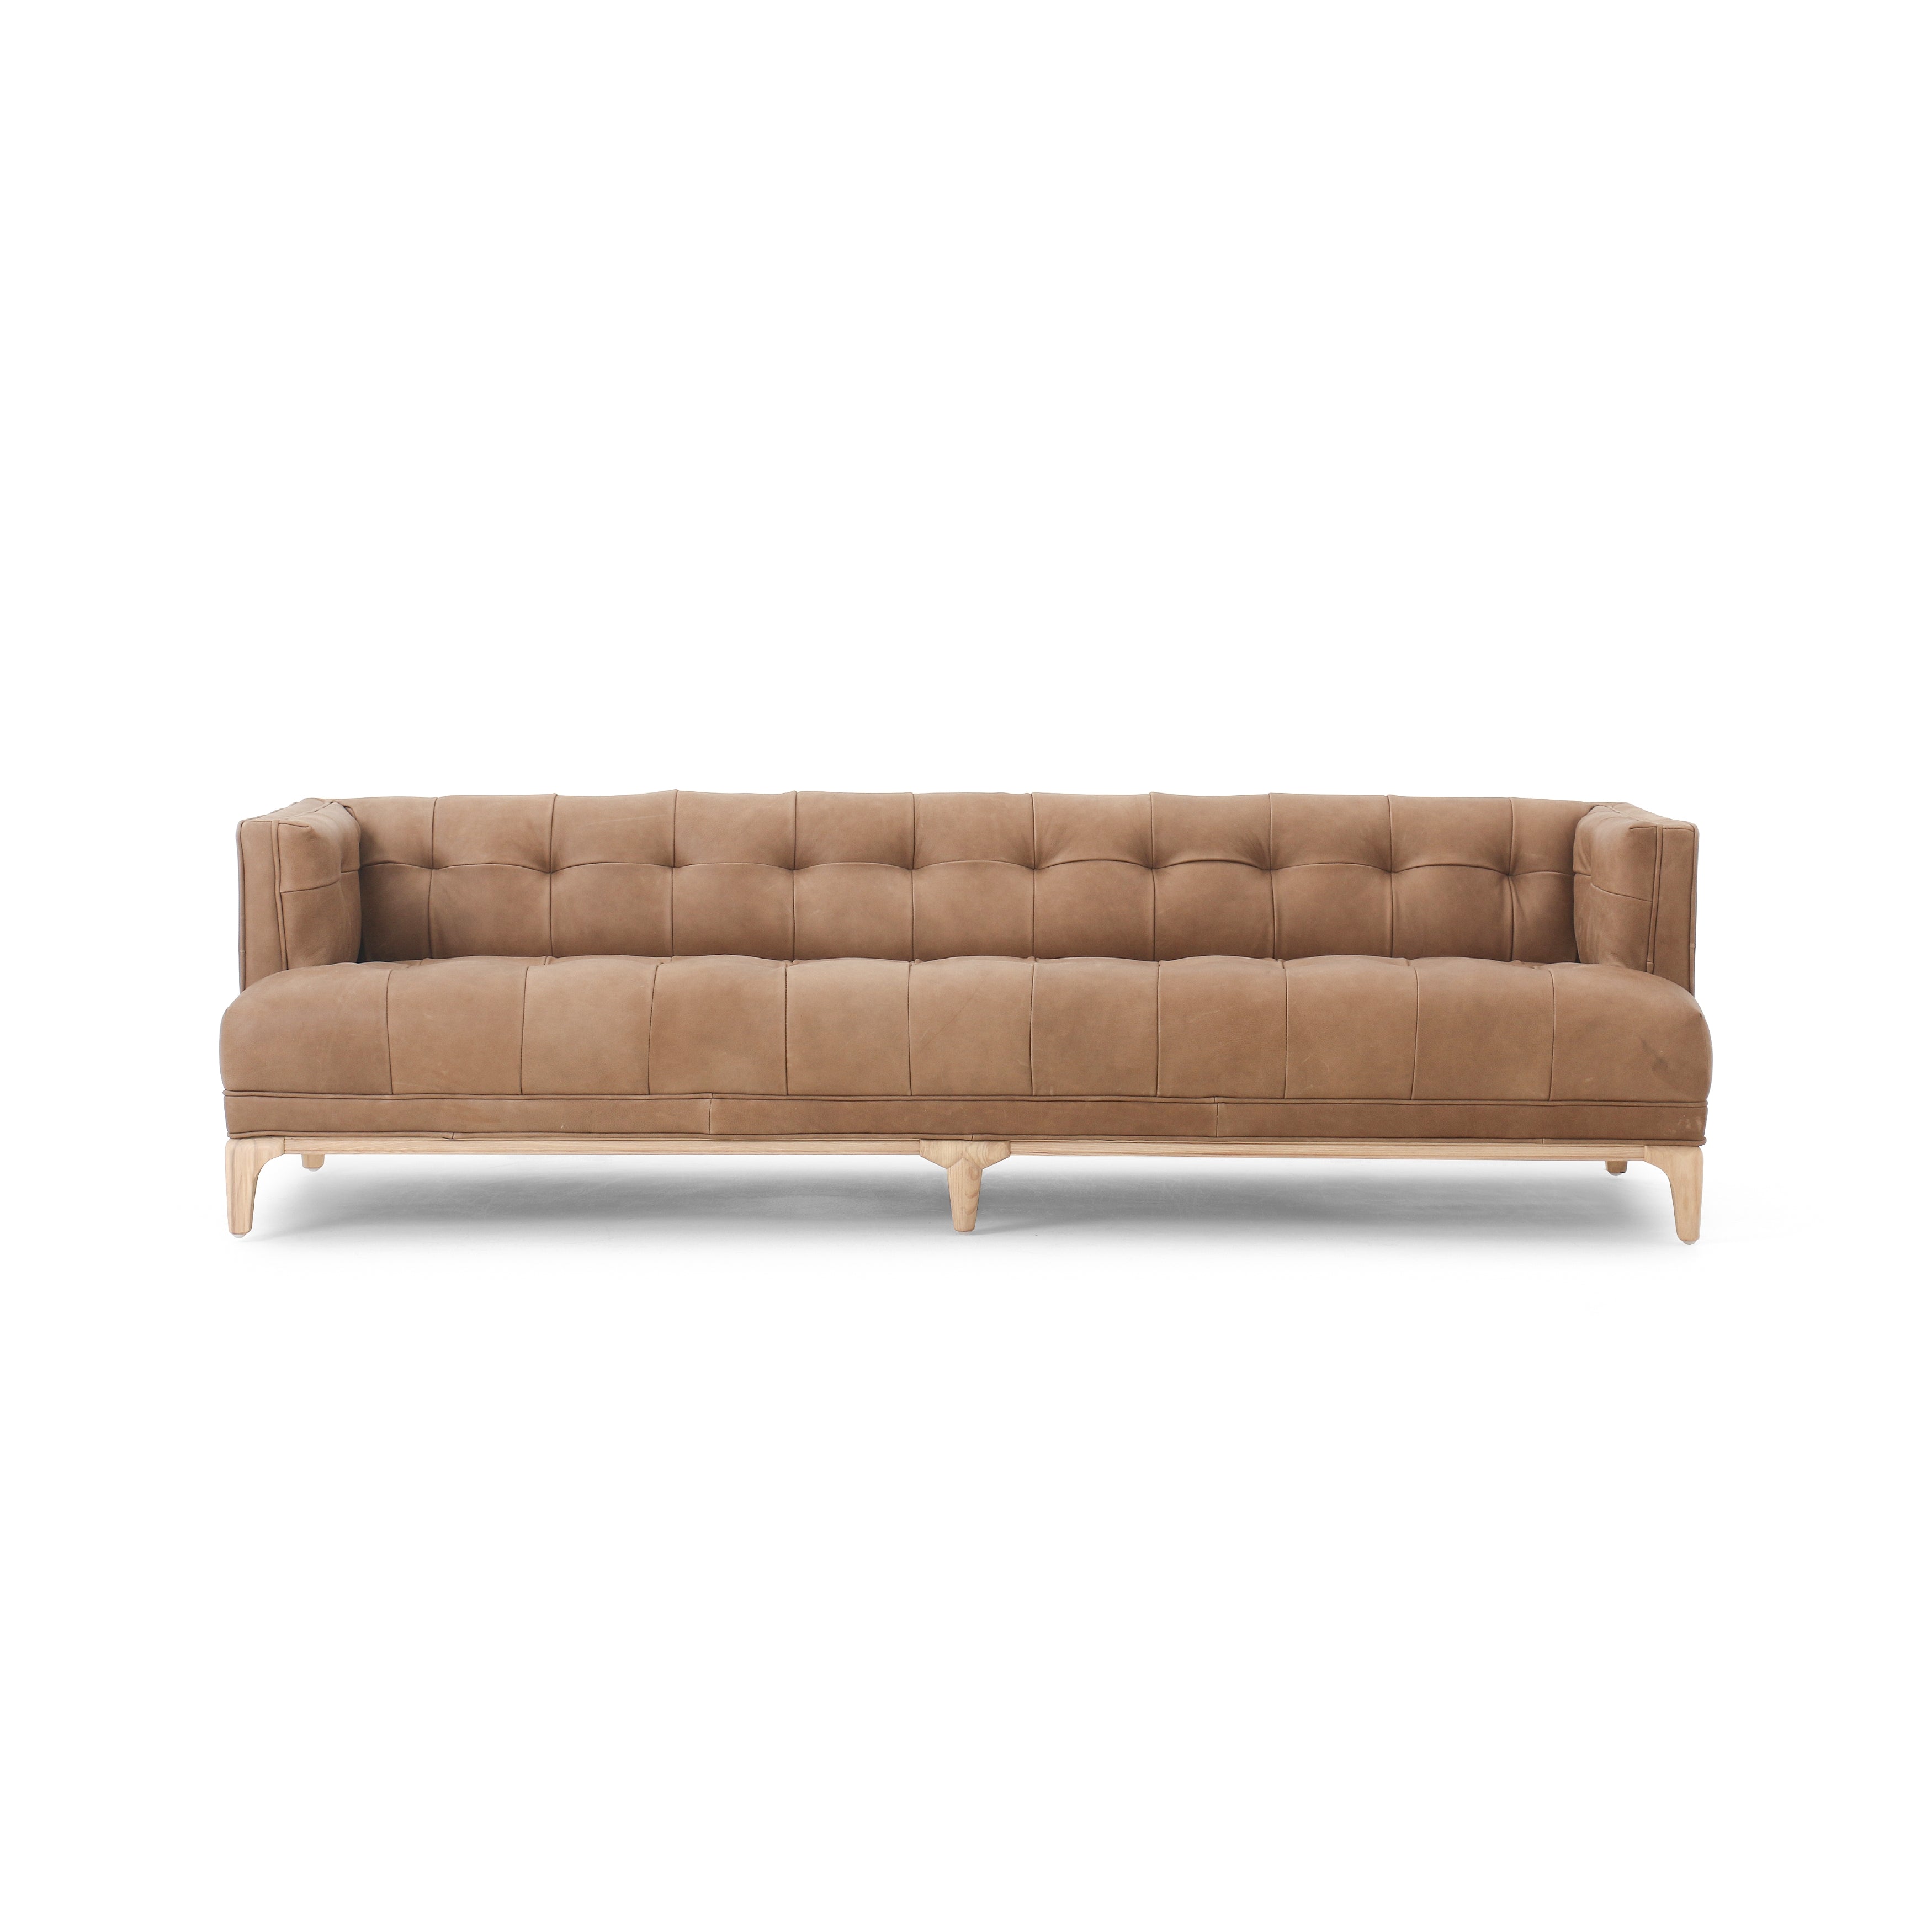 Vivian Leather Sofa